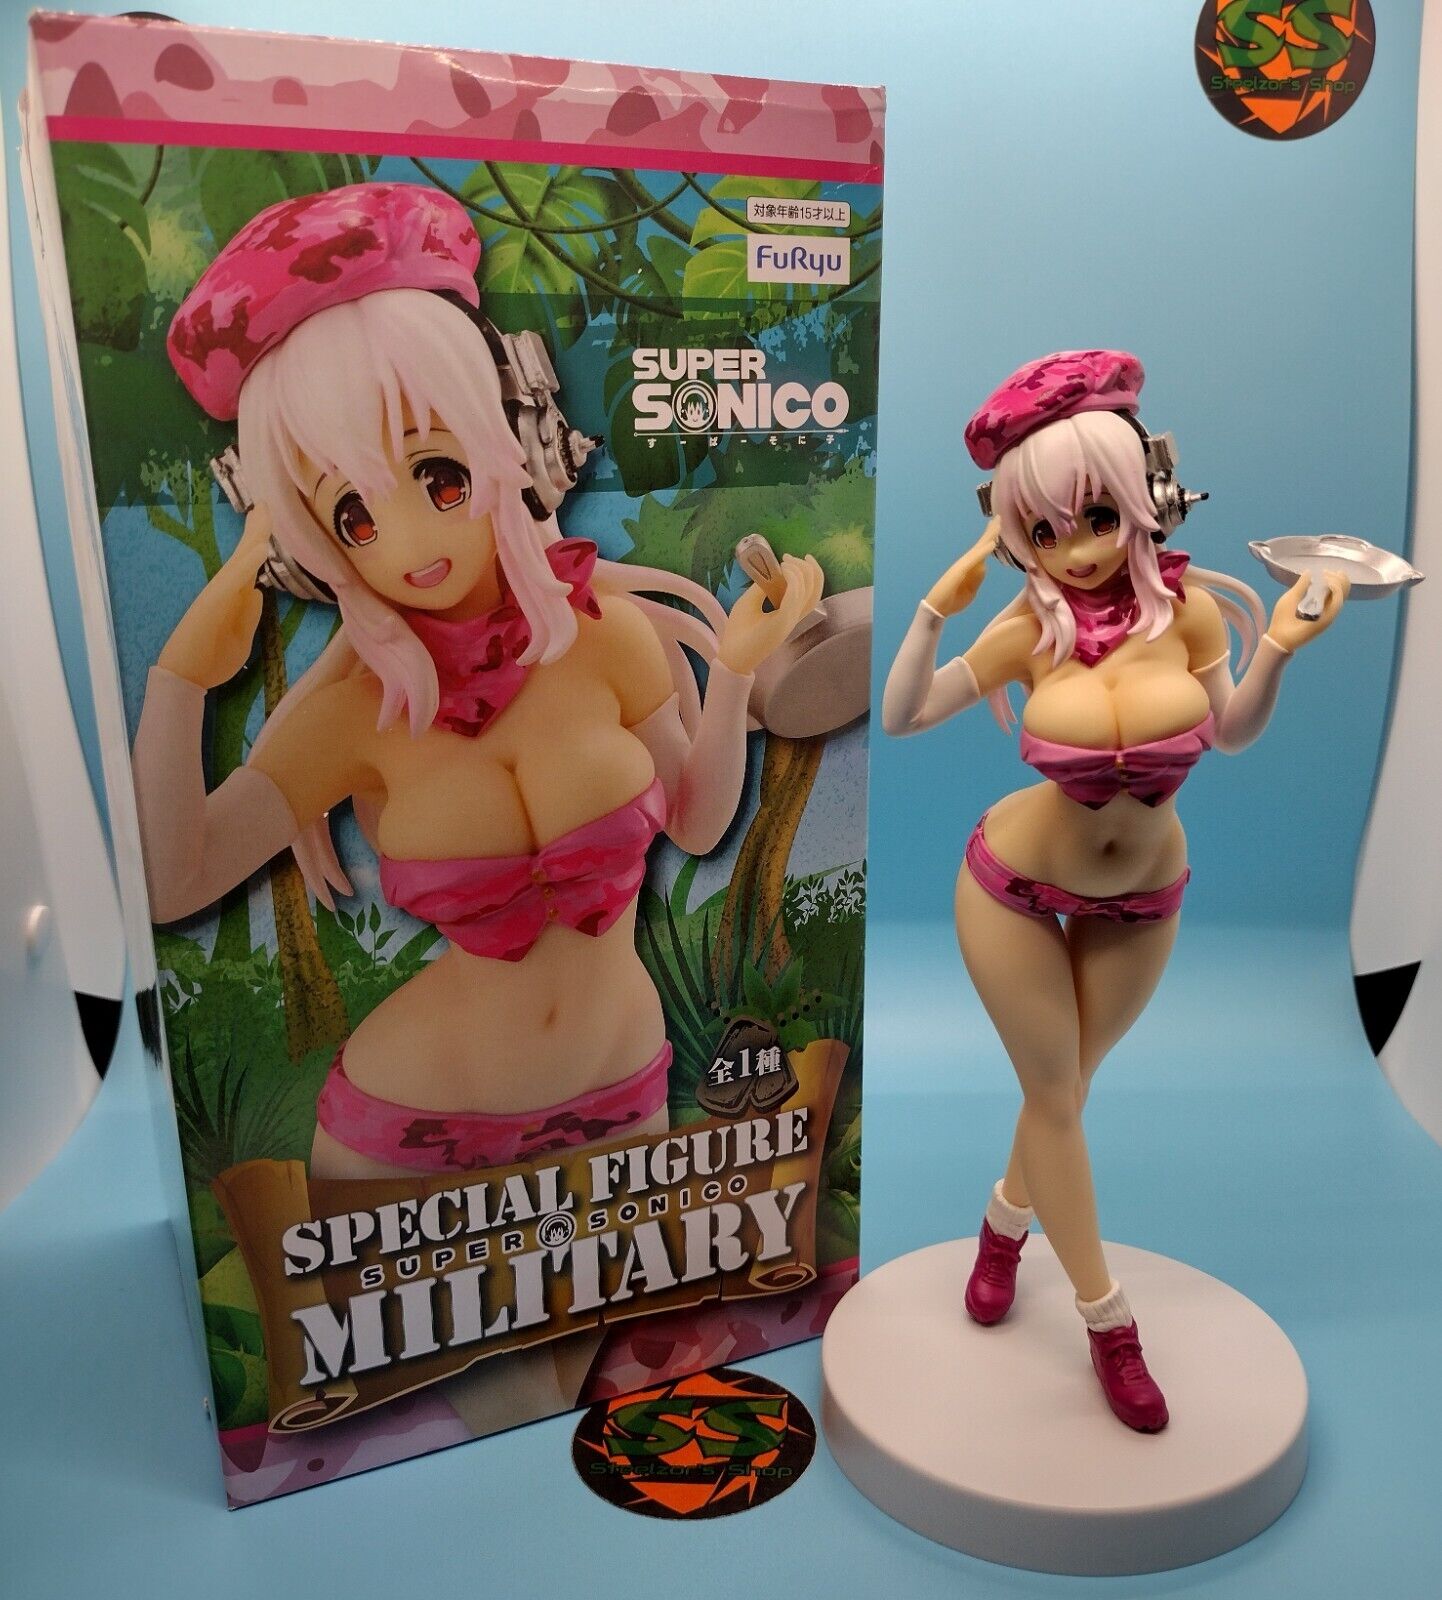 Super Sonico Special Figure (Military) - 8 Inch Anime Figure